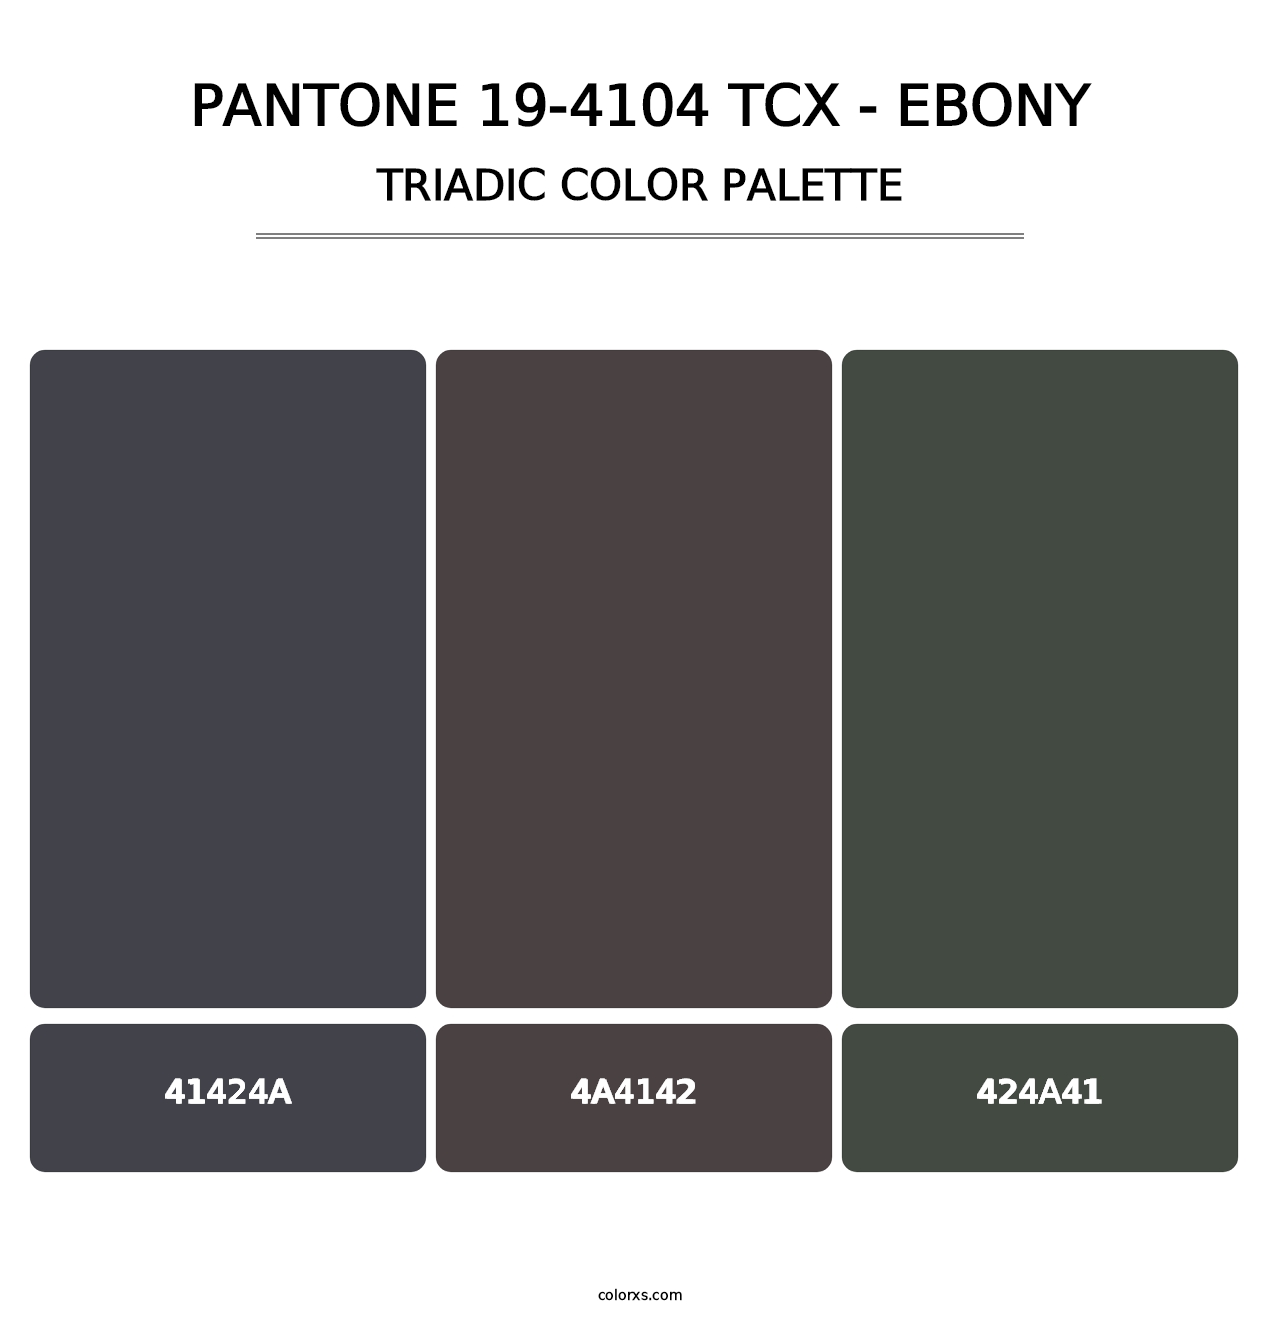 PANTONE 19-4104 TCX - Ebony - Triadic Color Palette